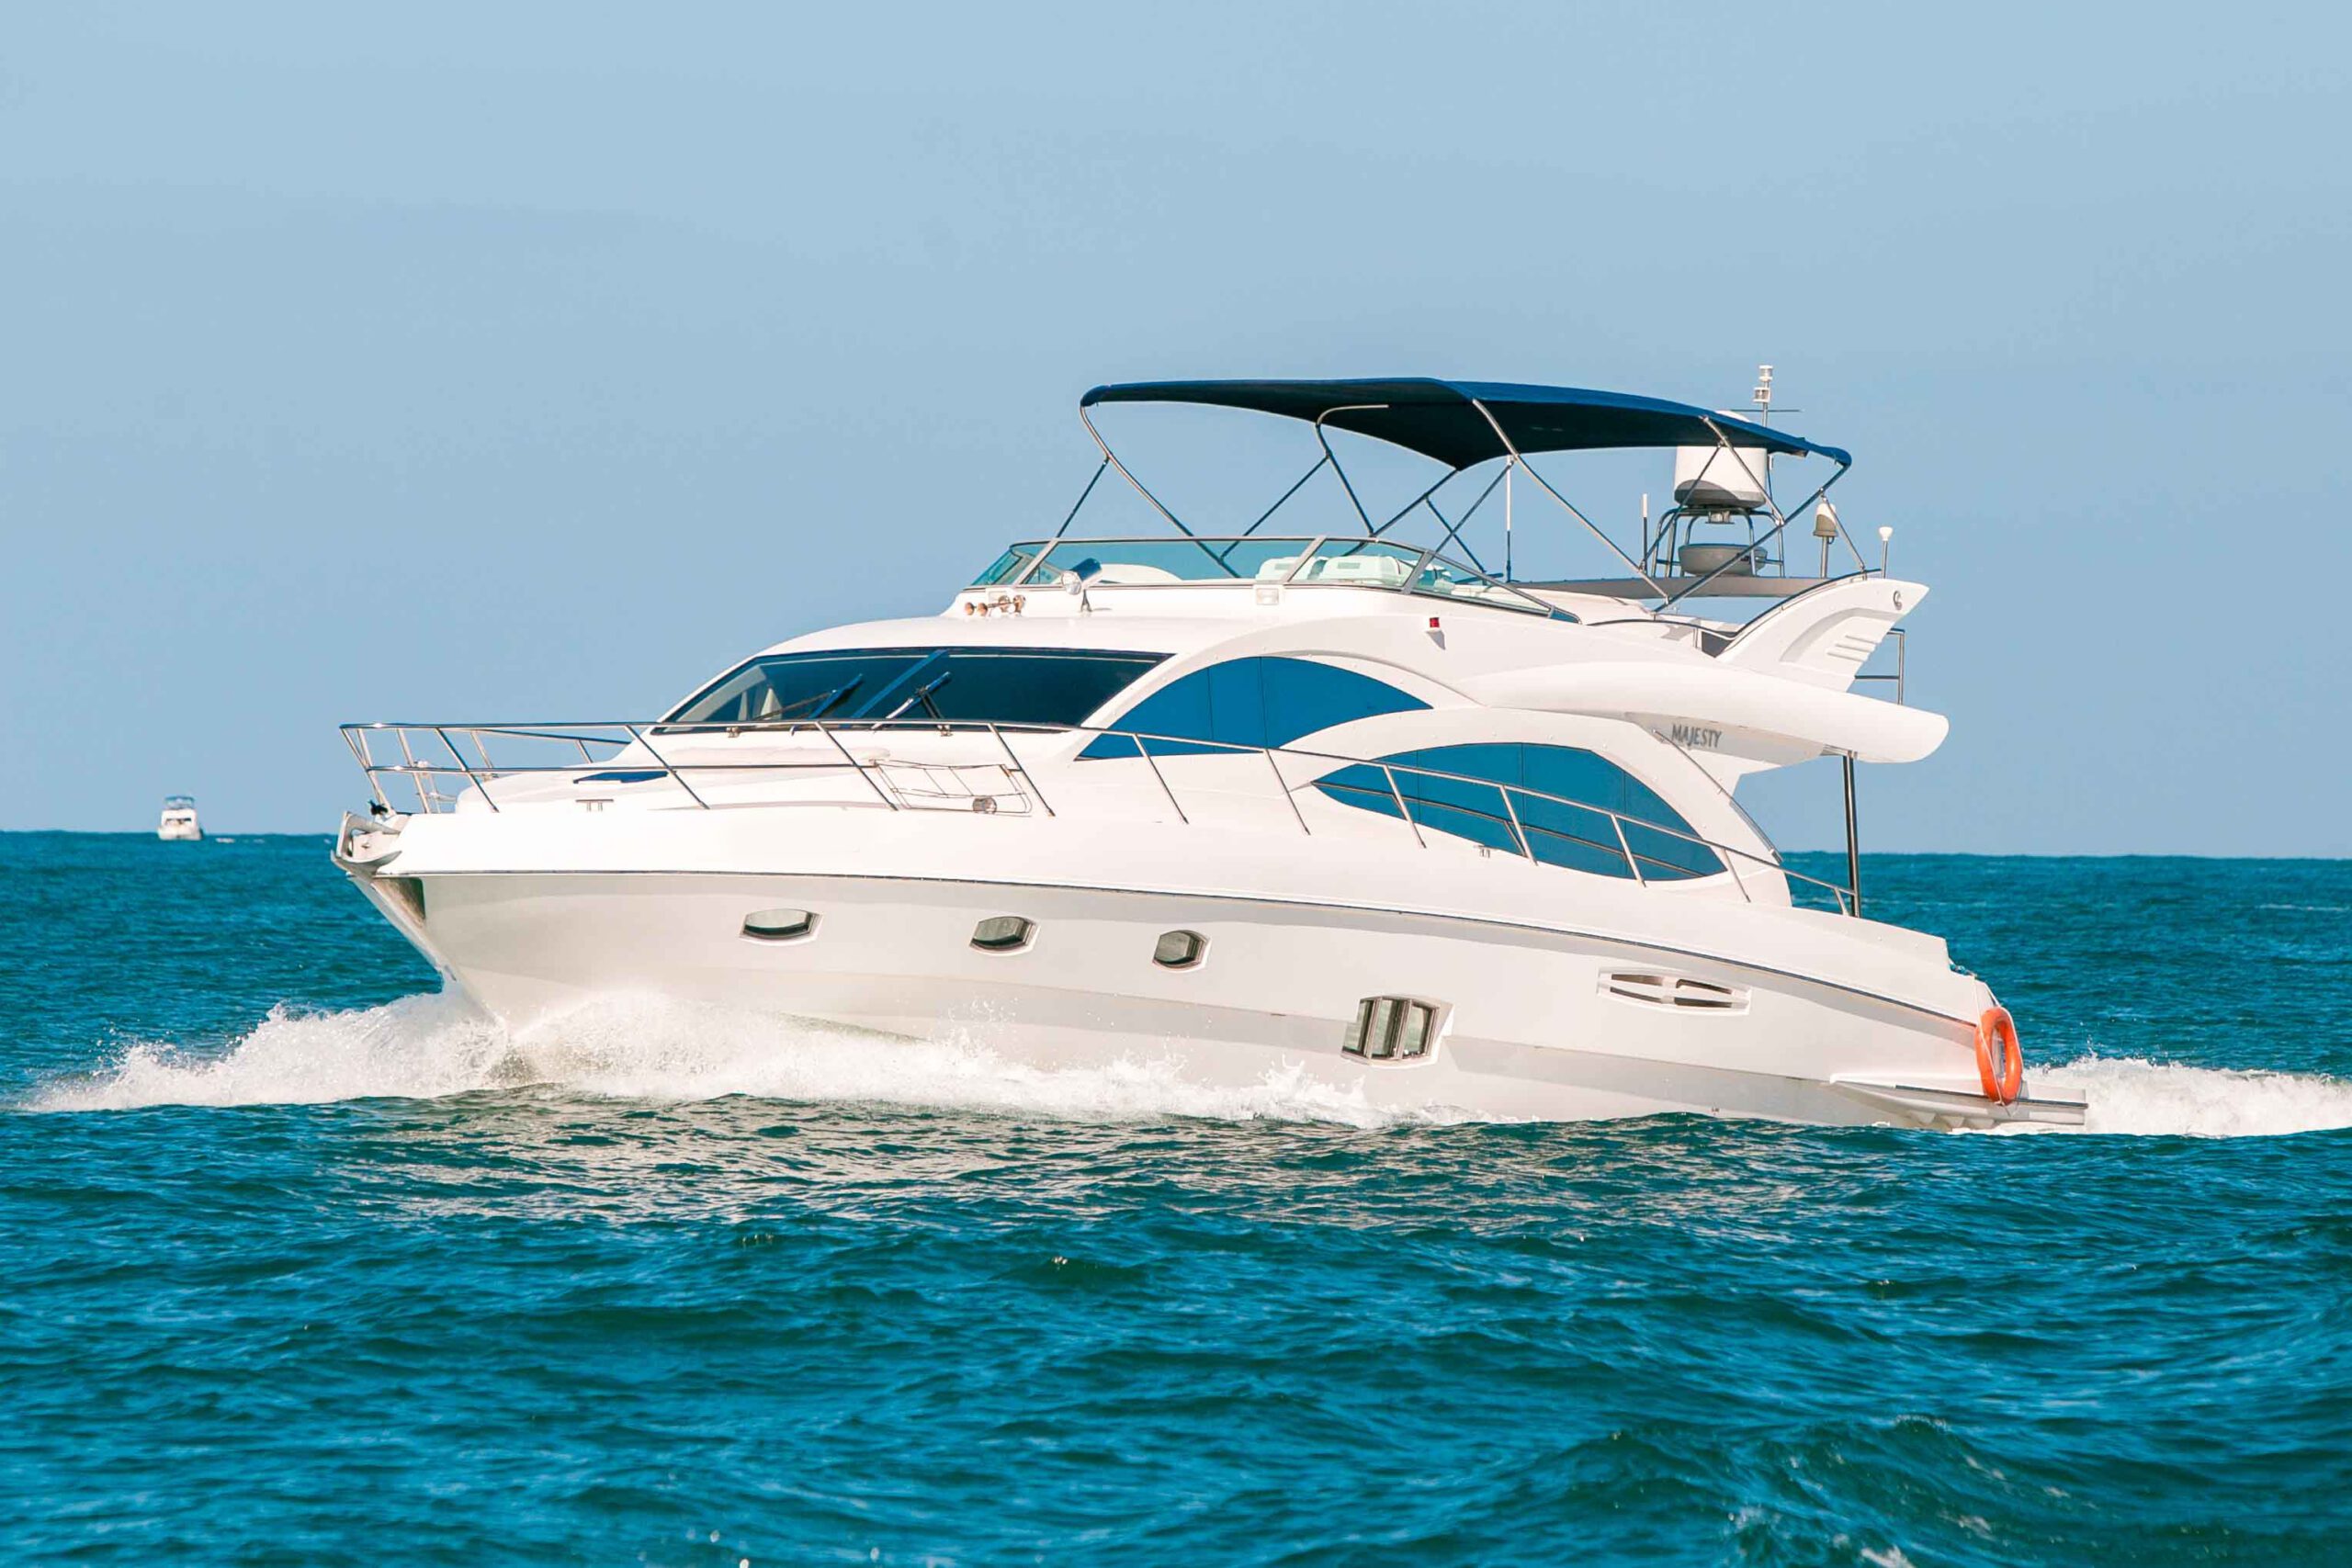 Explorer Goldeon Ode 60 ft. yacht with best price in Dubai